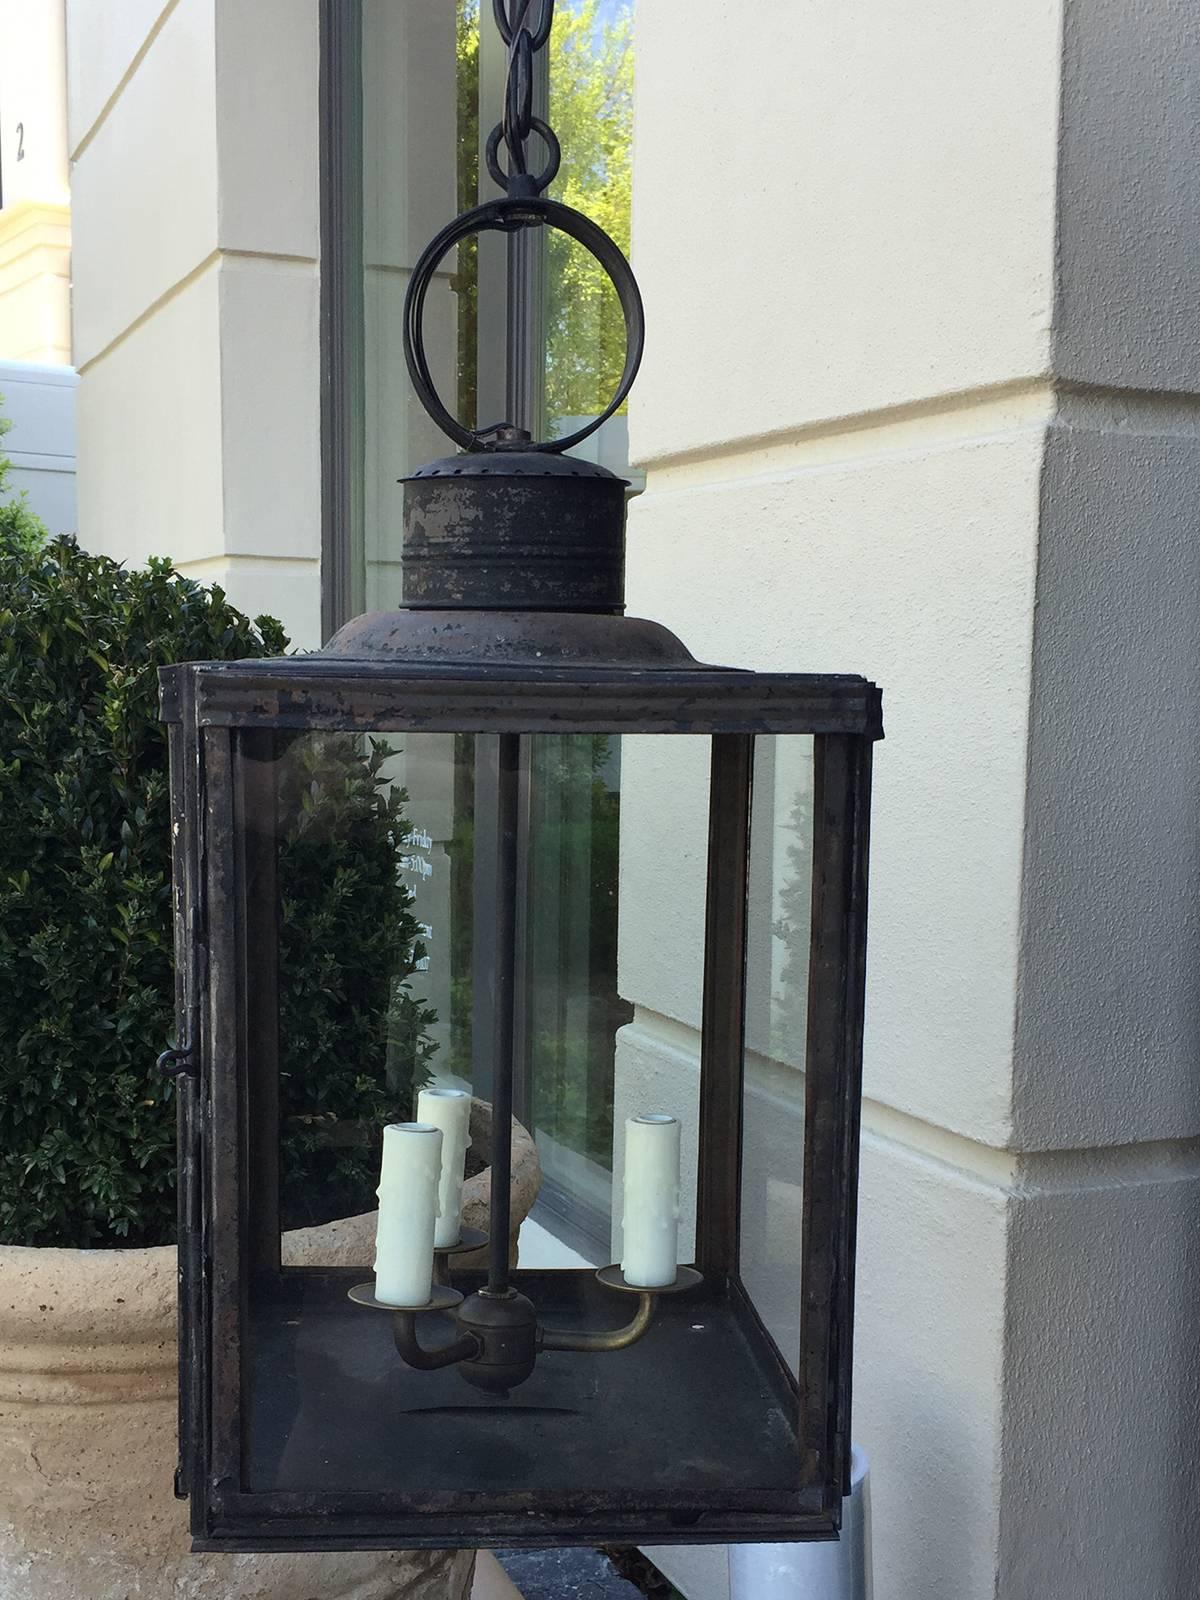 Early 19th century American iron lantern.